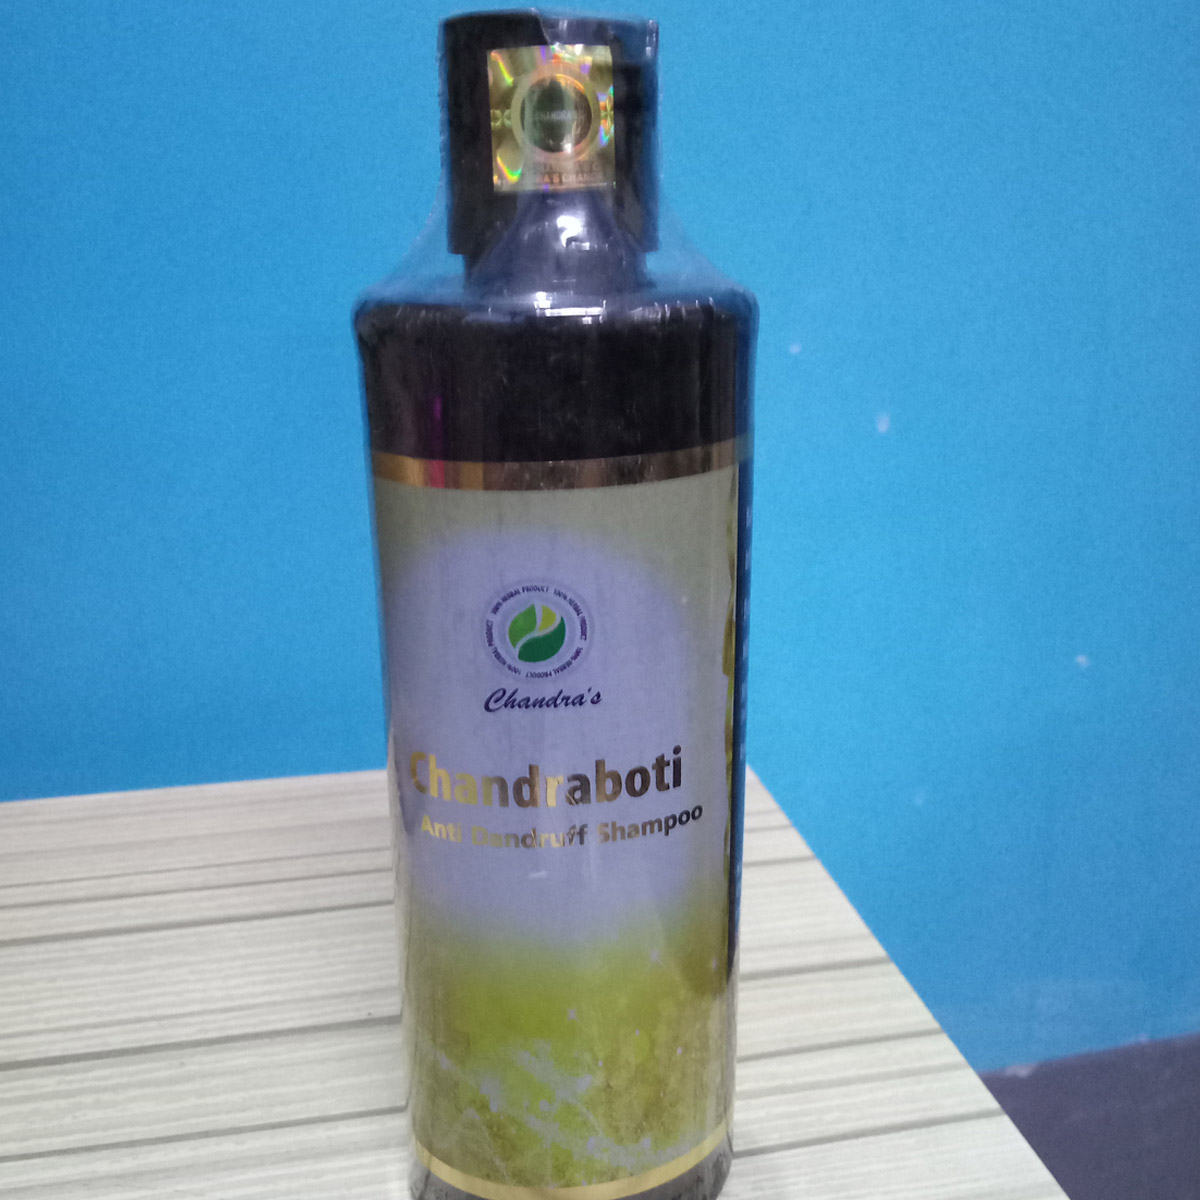 Bengal Shopping - One Life to Live - One Store to Shop | Chandraboti Anti  Dandruff Shampoo 200ml